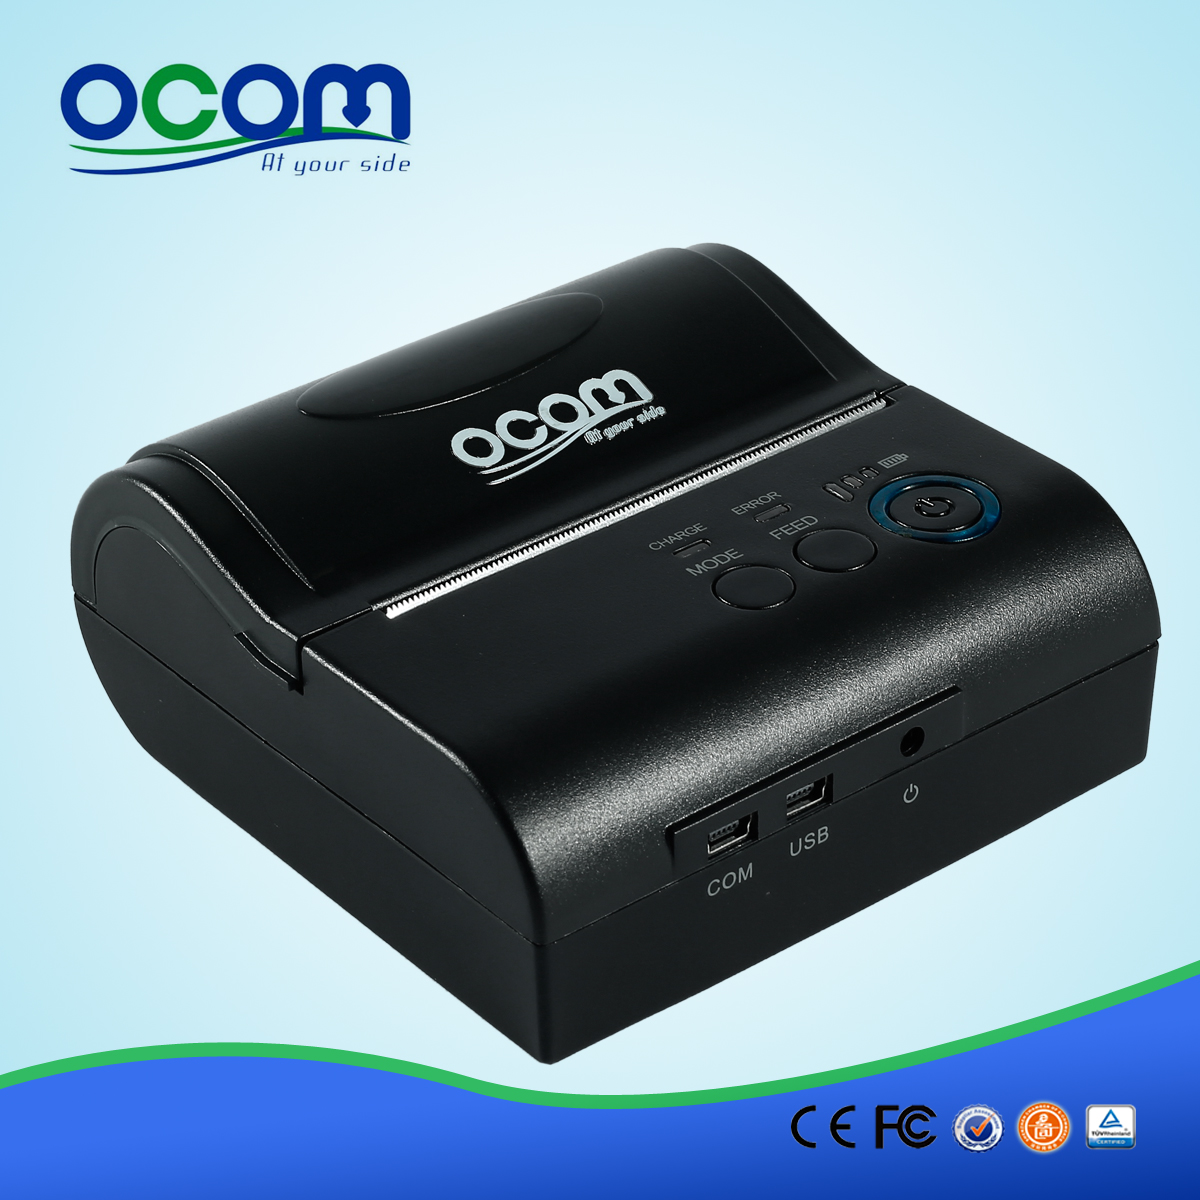 OCPP-M082: 3 pouces WiFi mini-imprimante ticket thermique